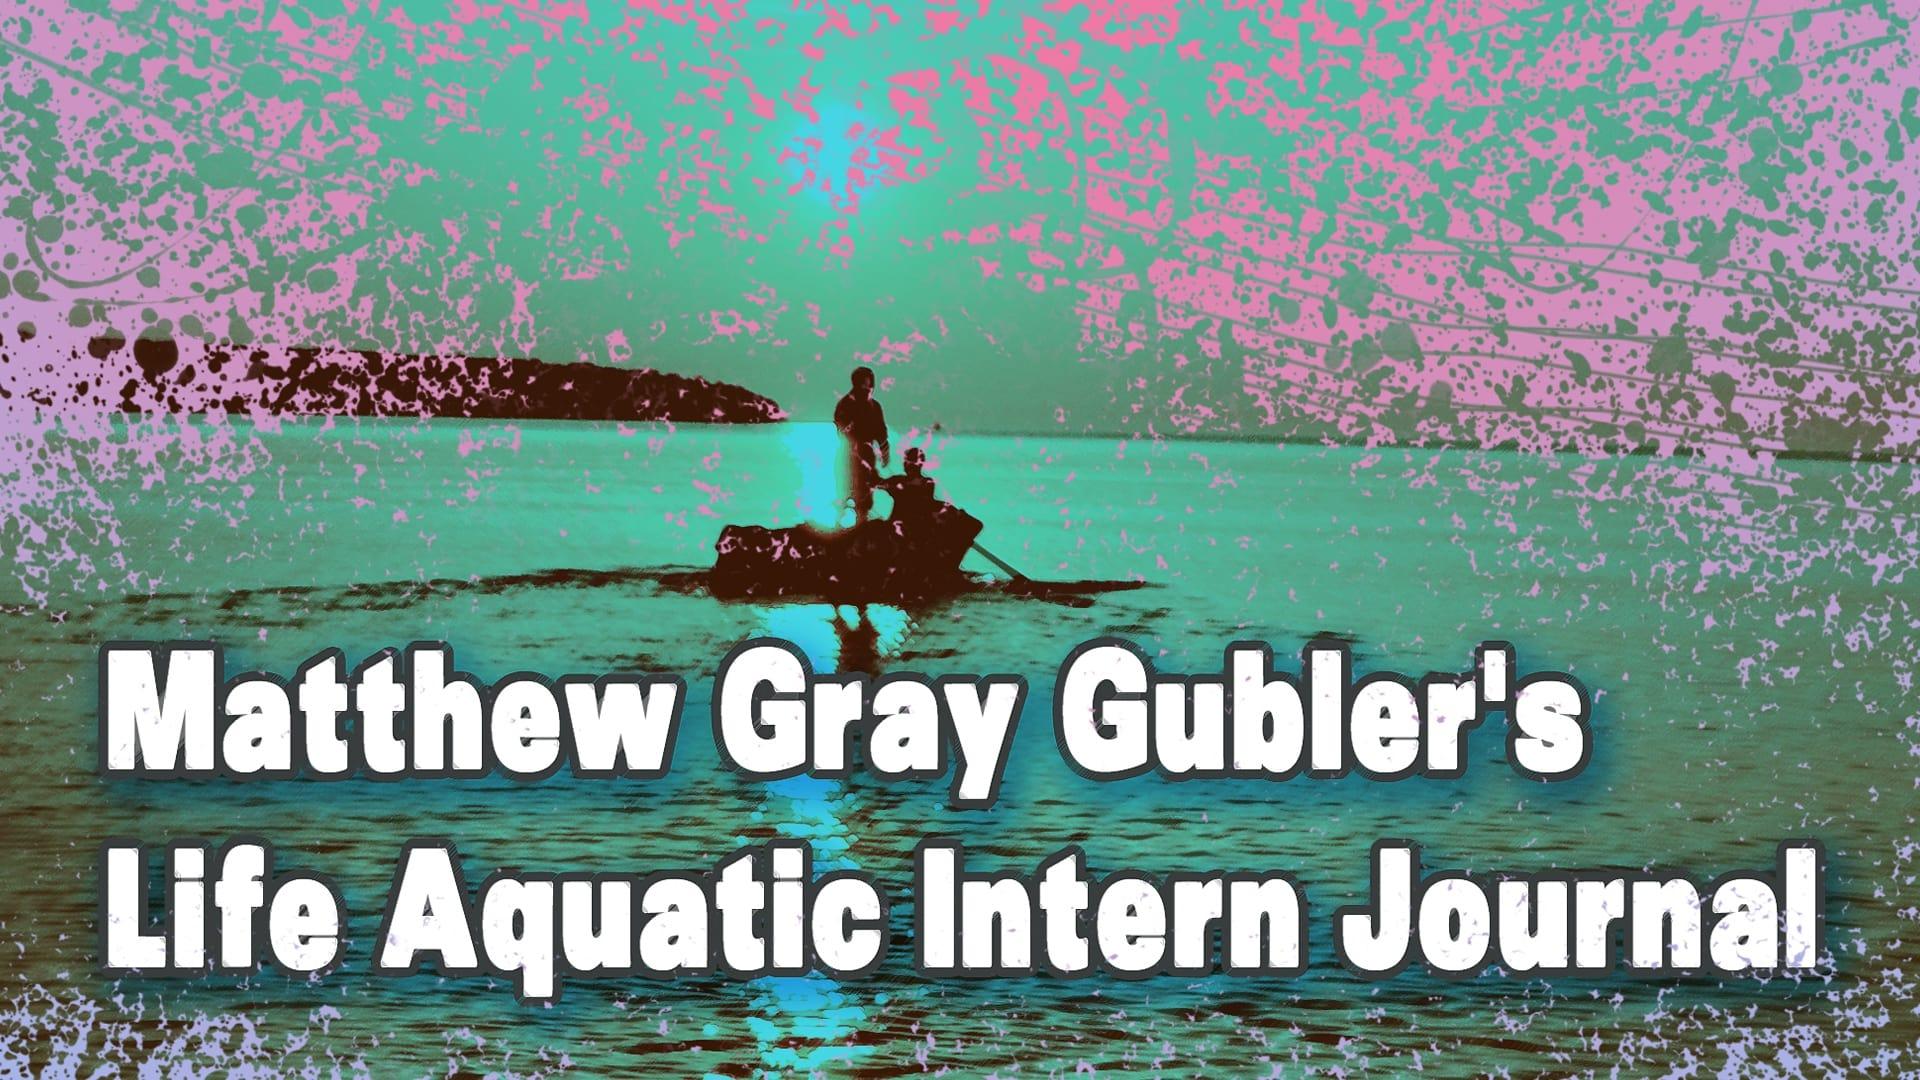 Matthew Gray Gubler's Life Aquatic Intern Journal backdrop